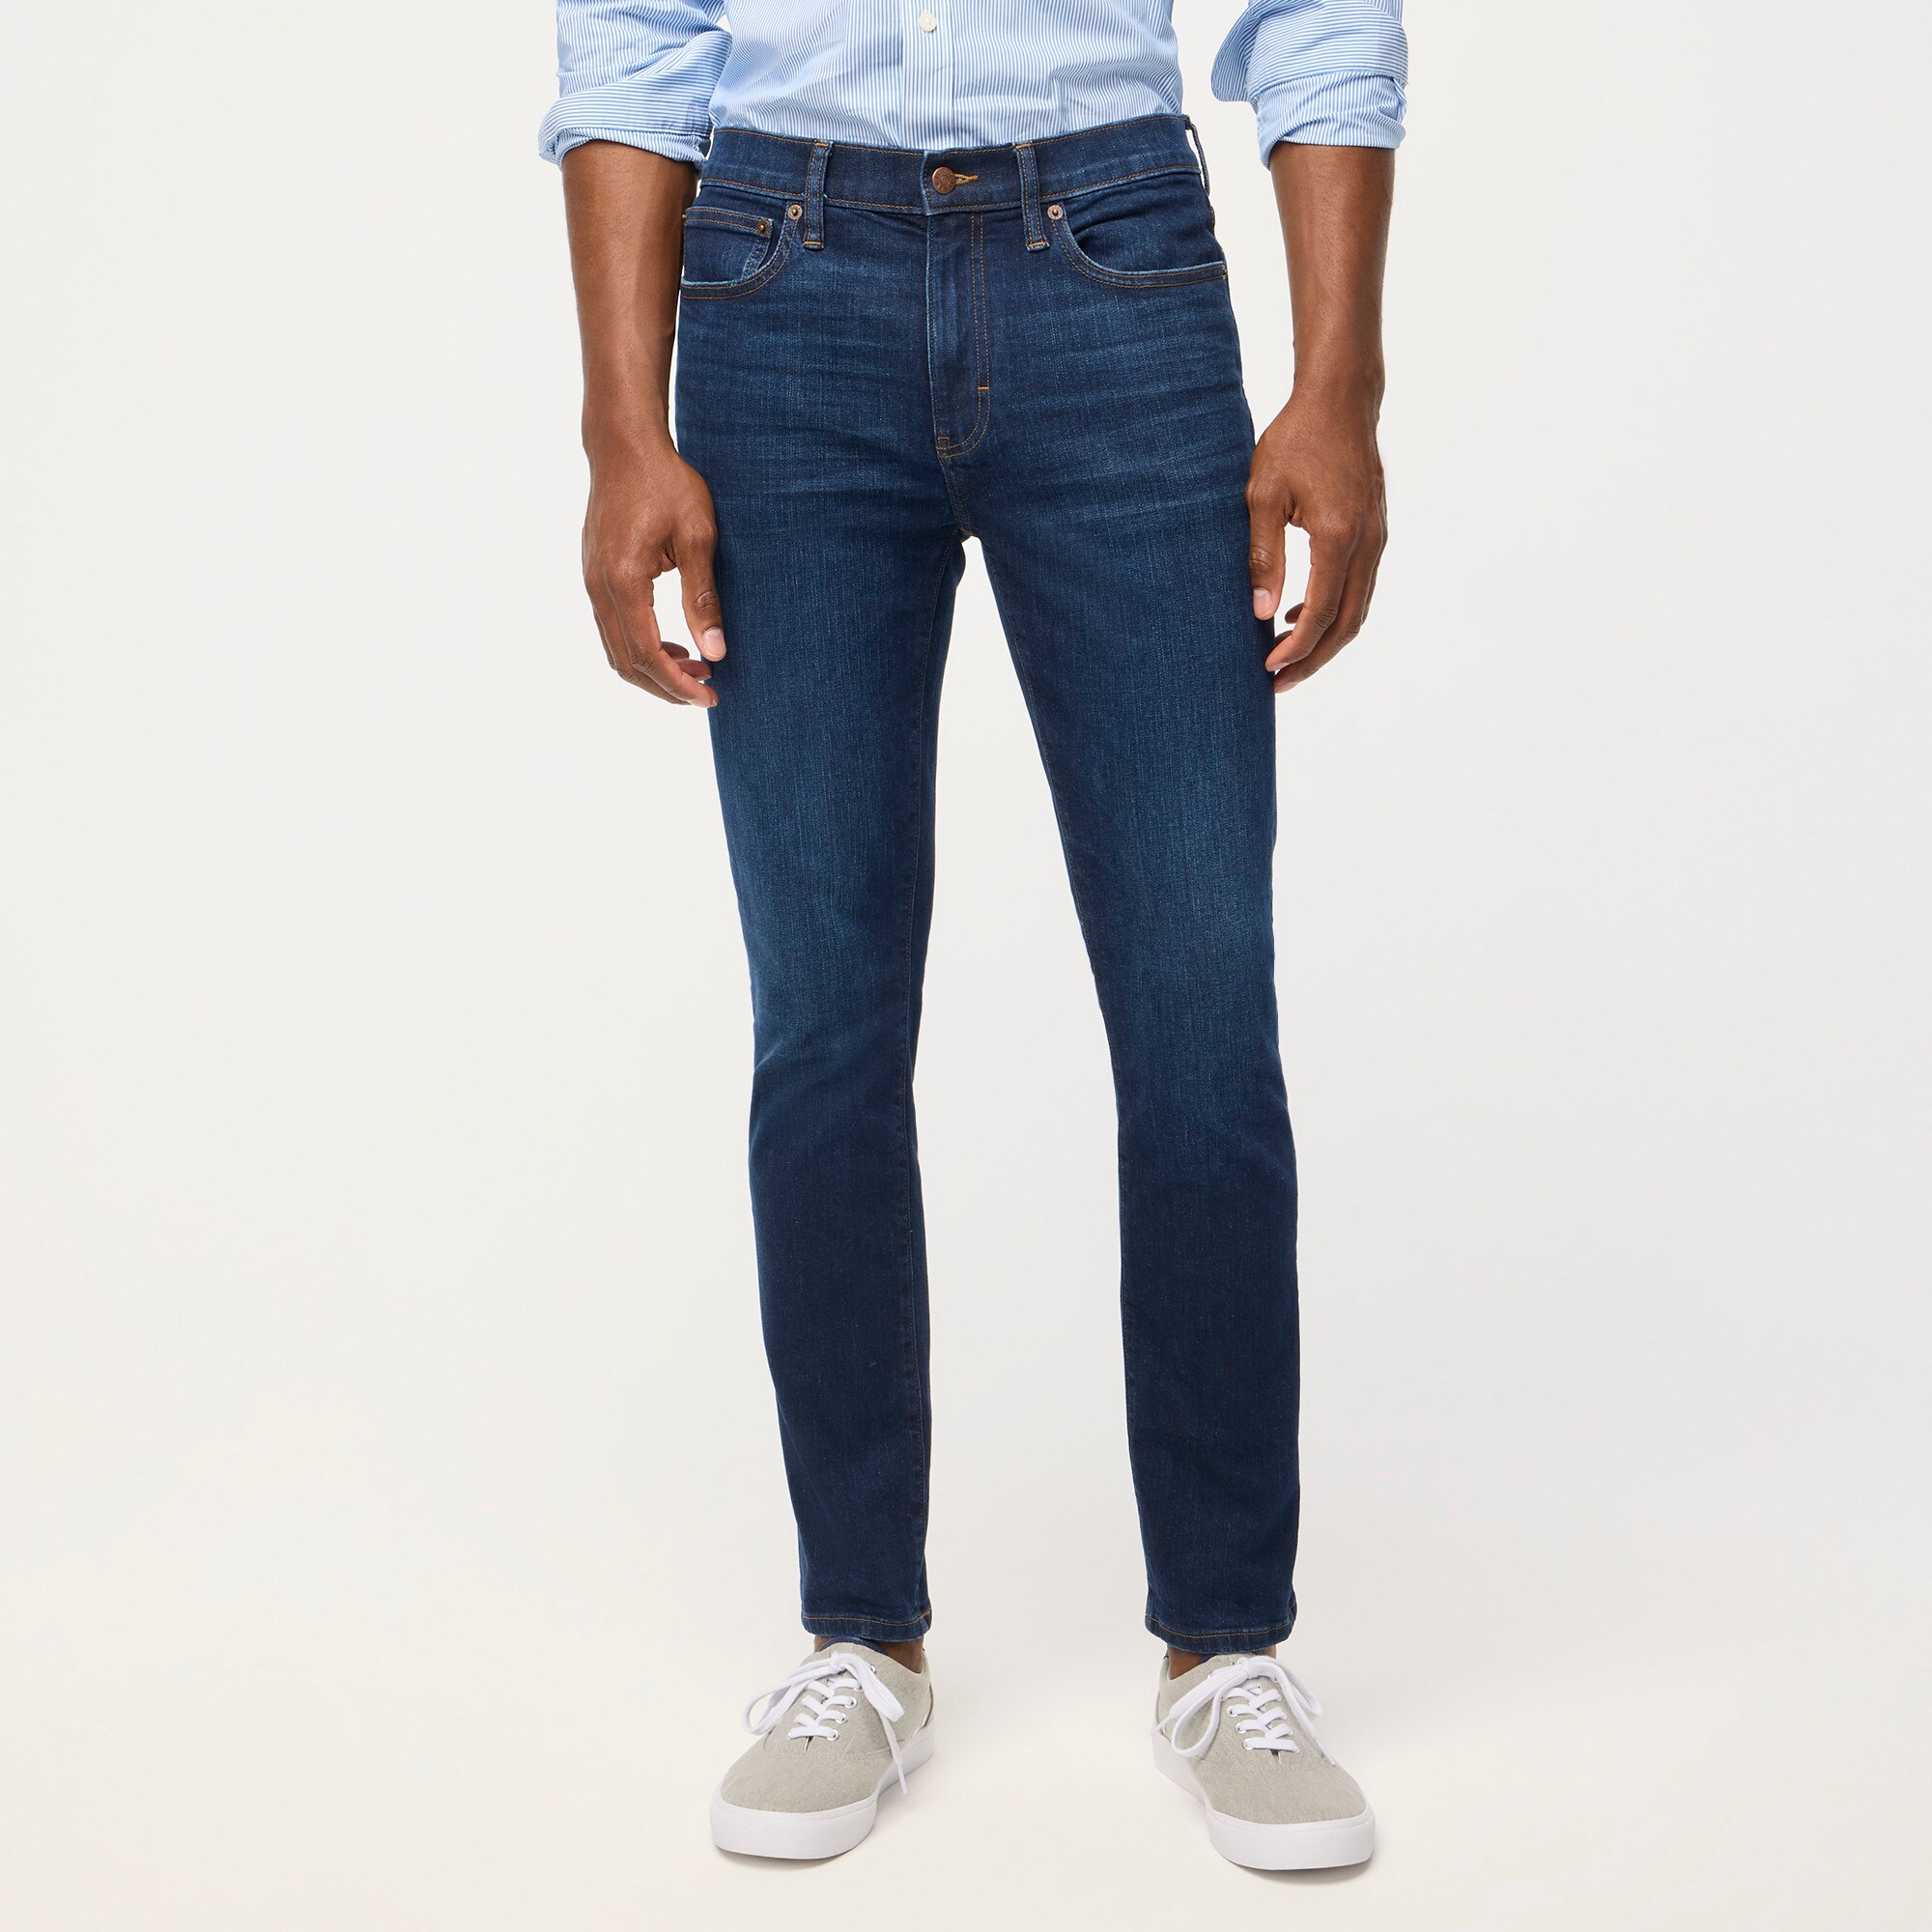 mens Skinny-fit jean in signature flex